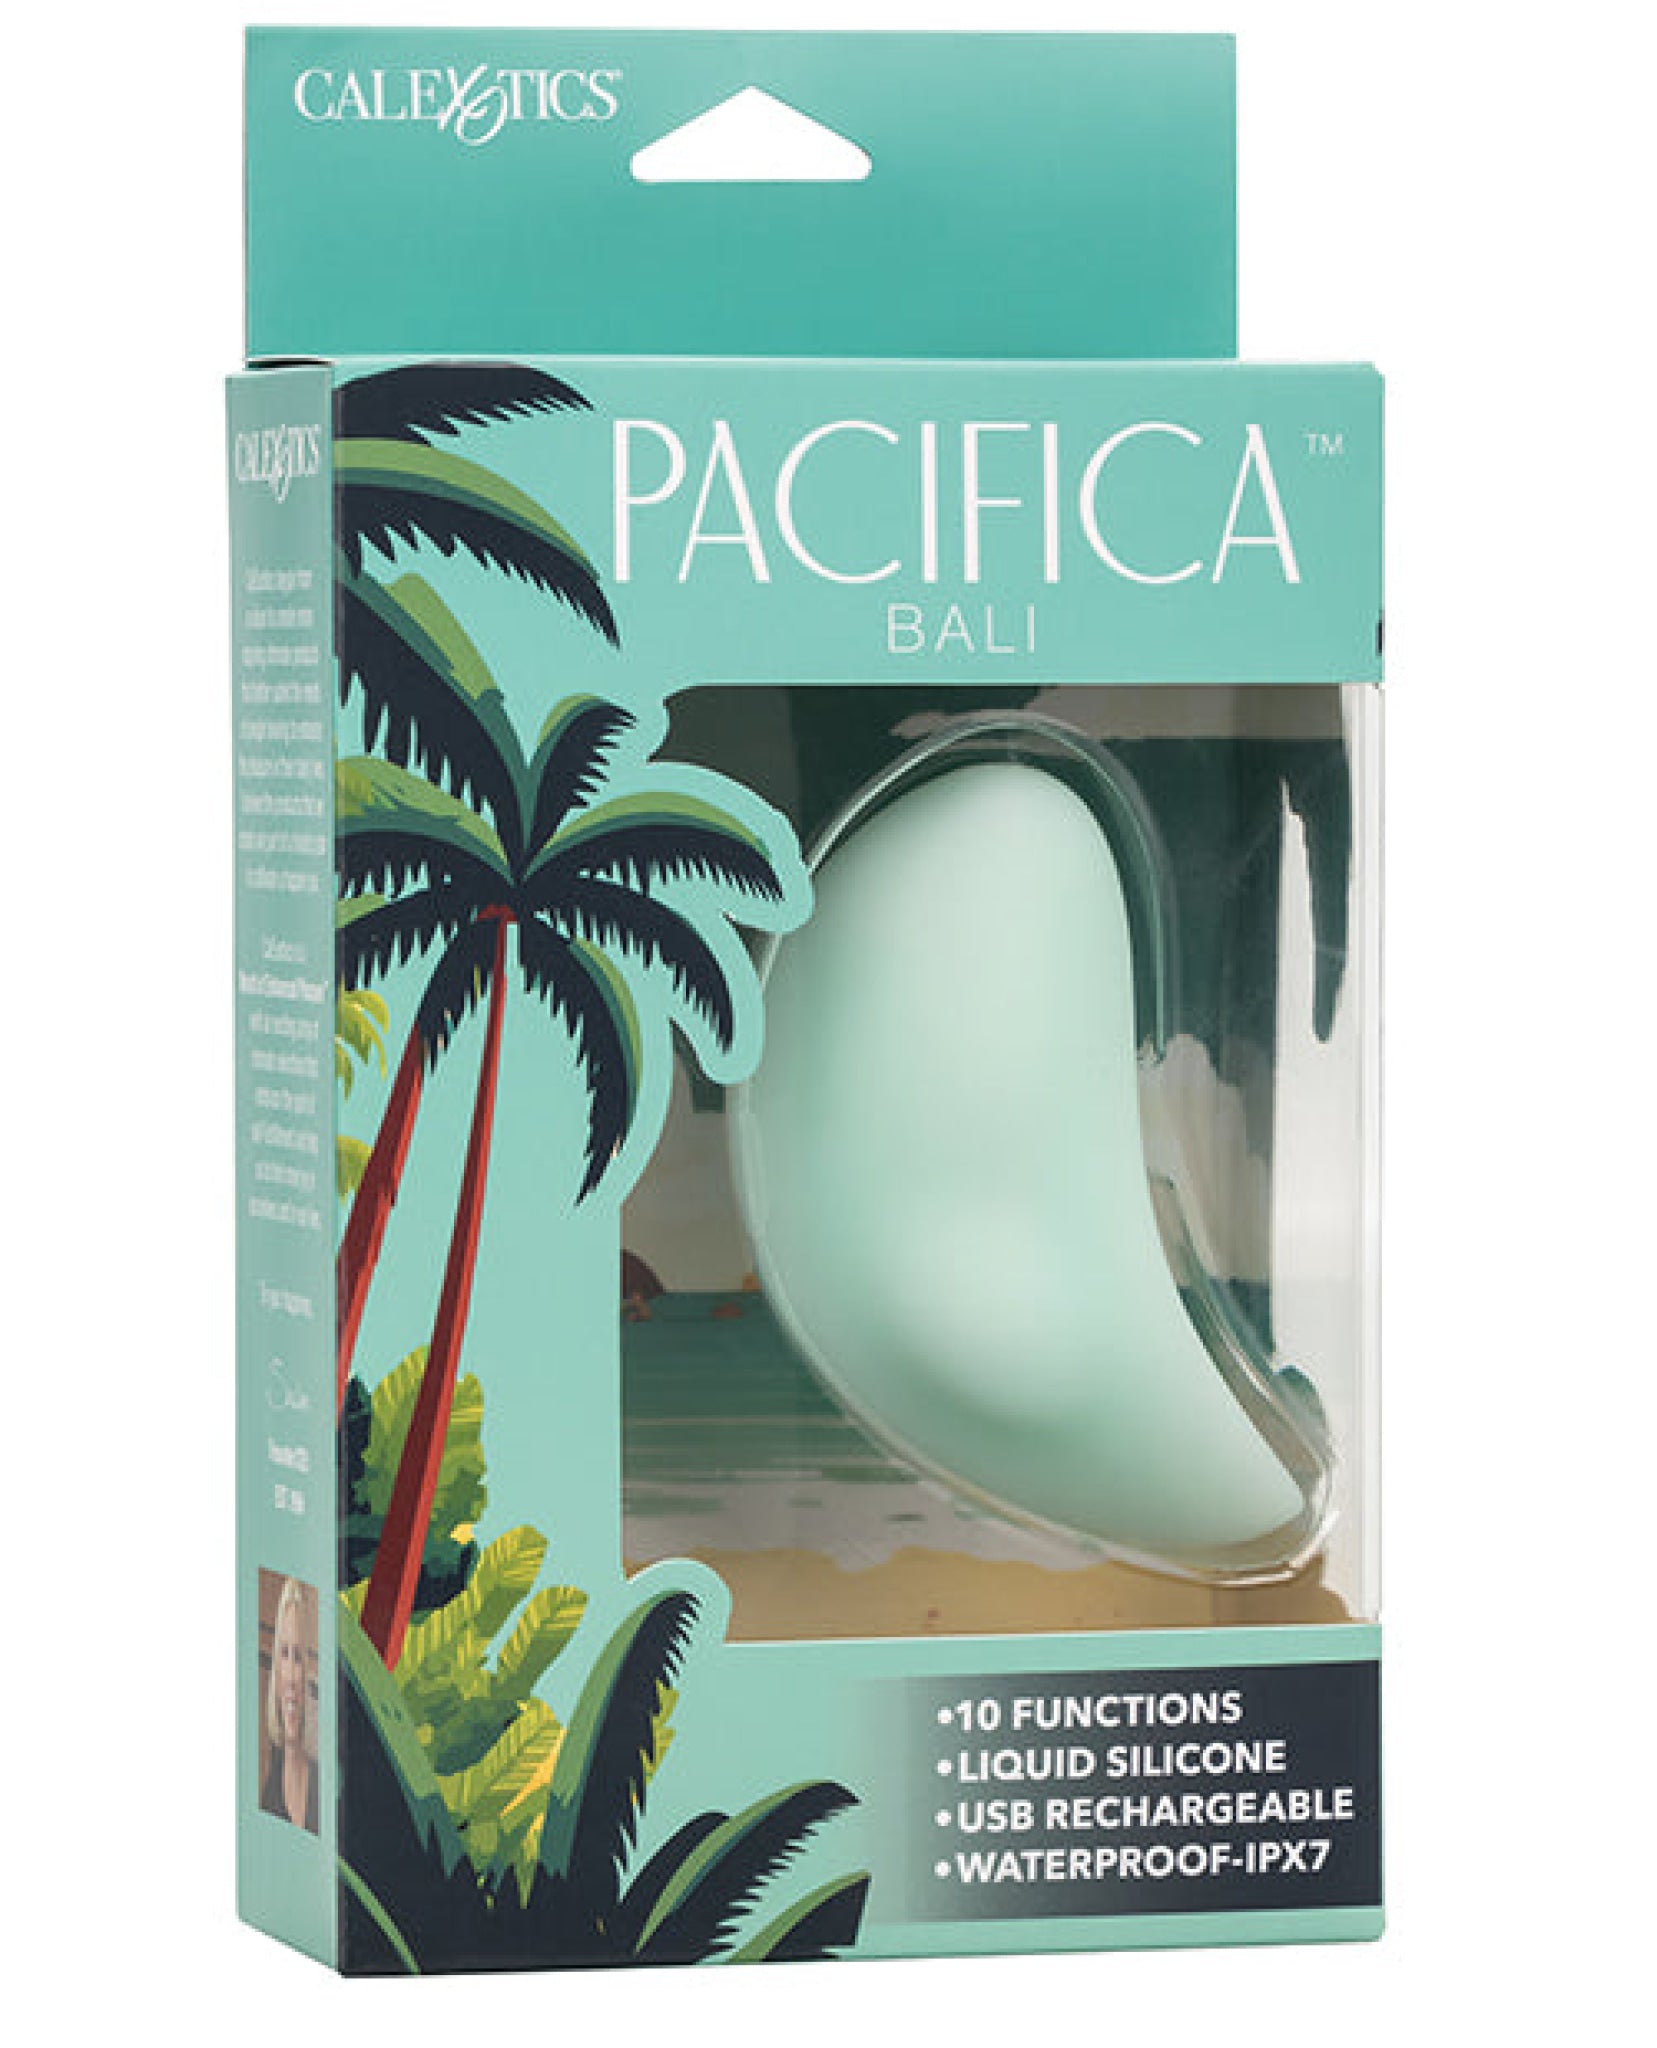 Pacifica Bali Stimulator California Exotic Novelties